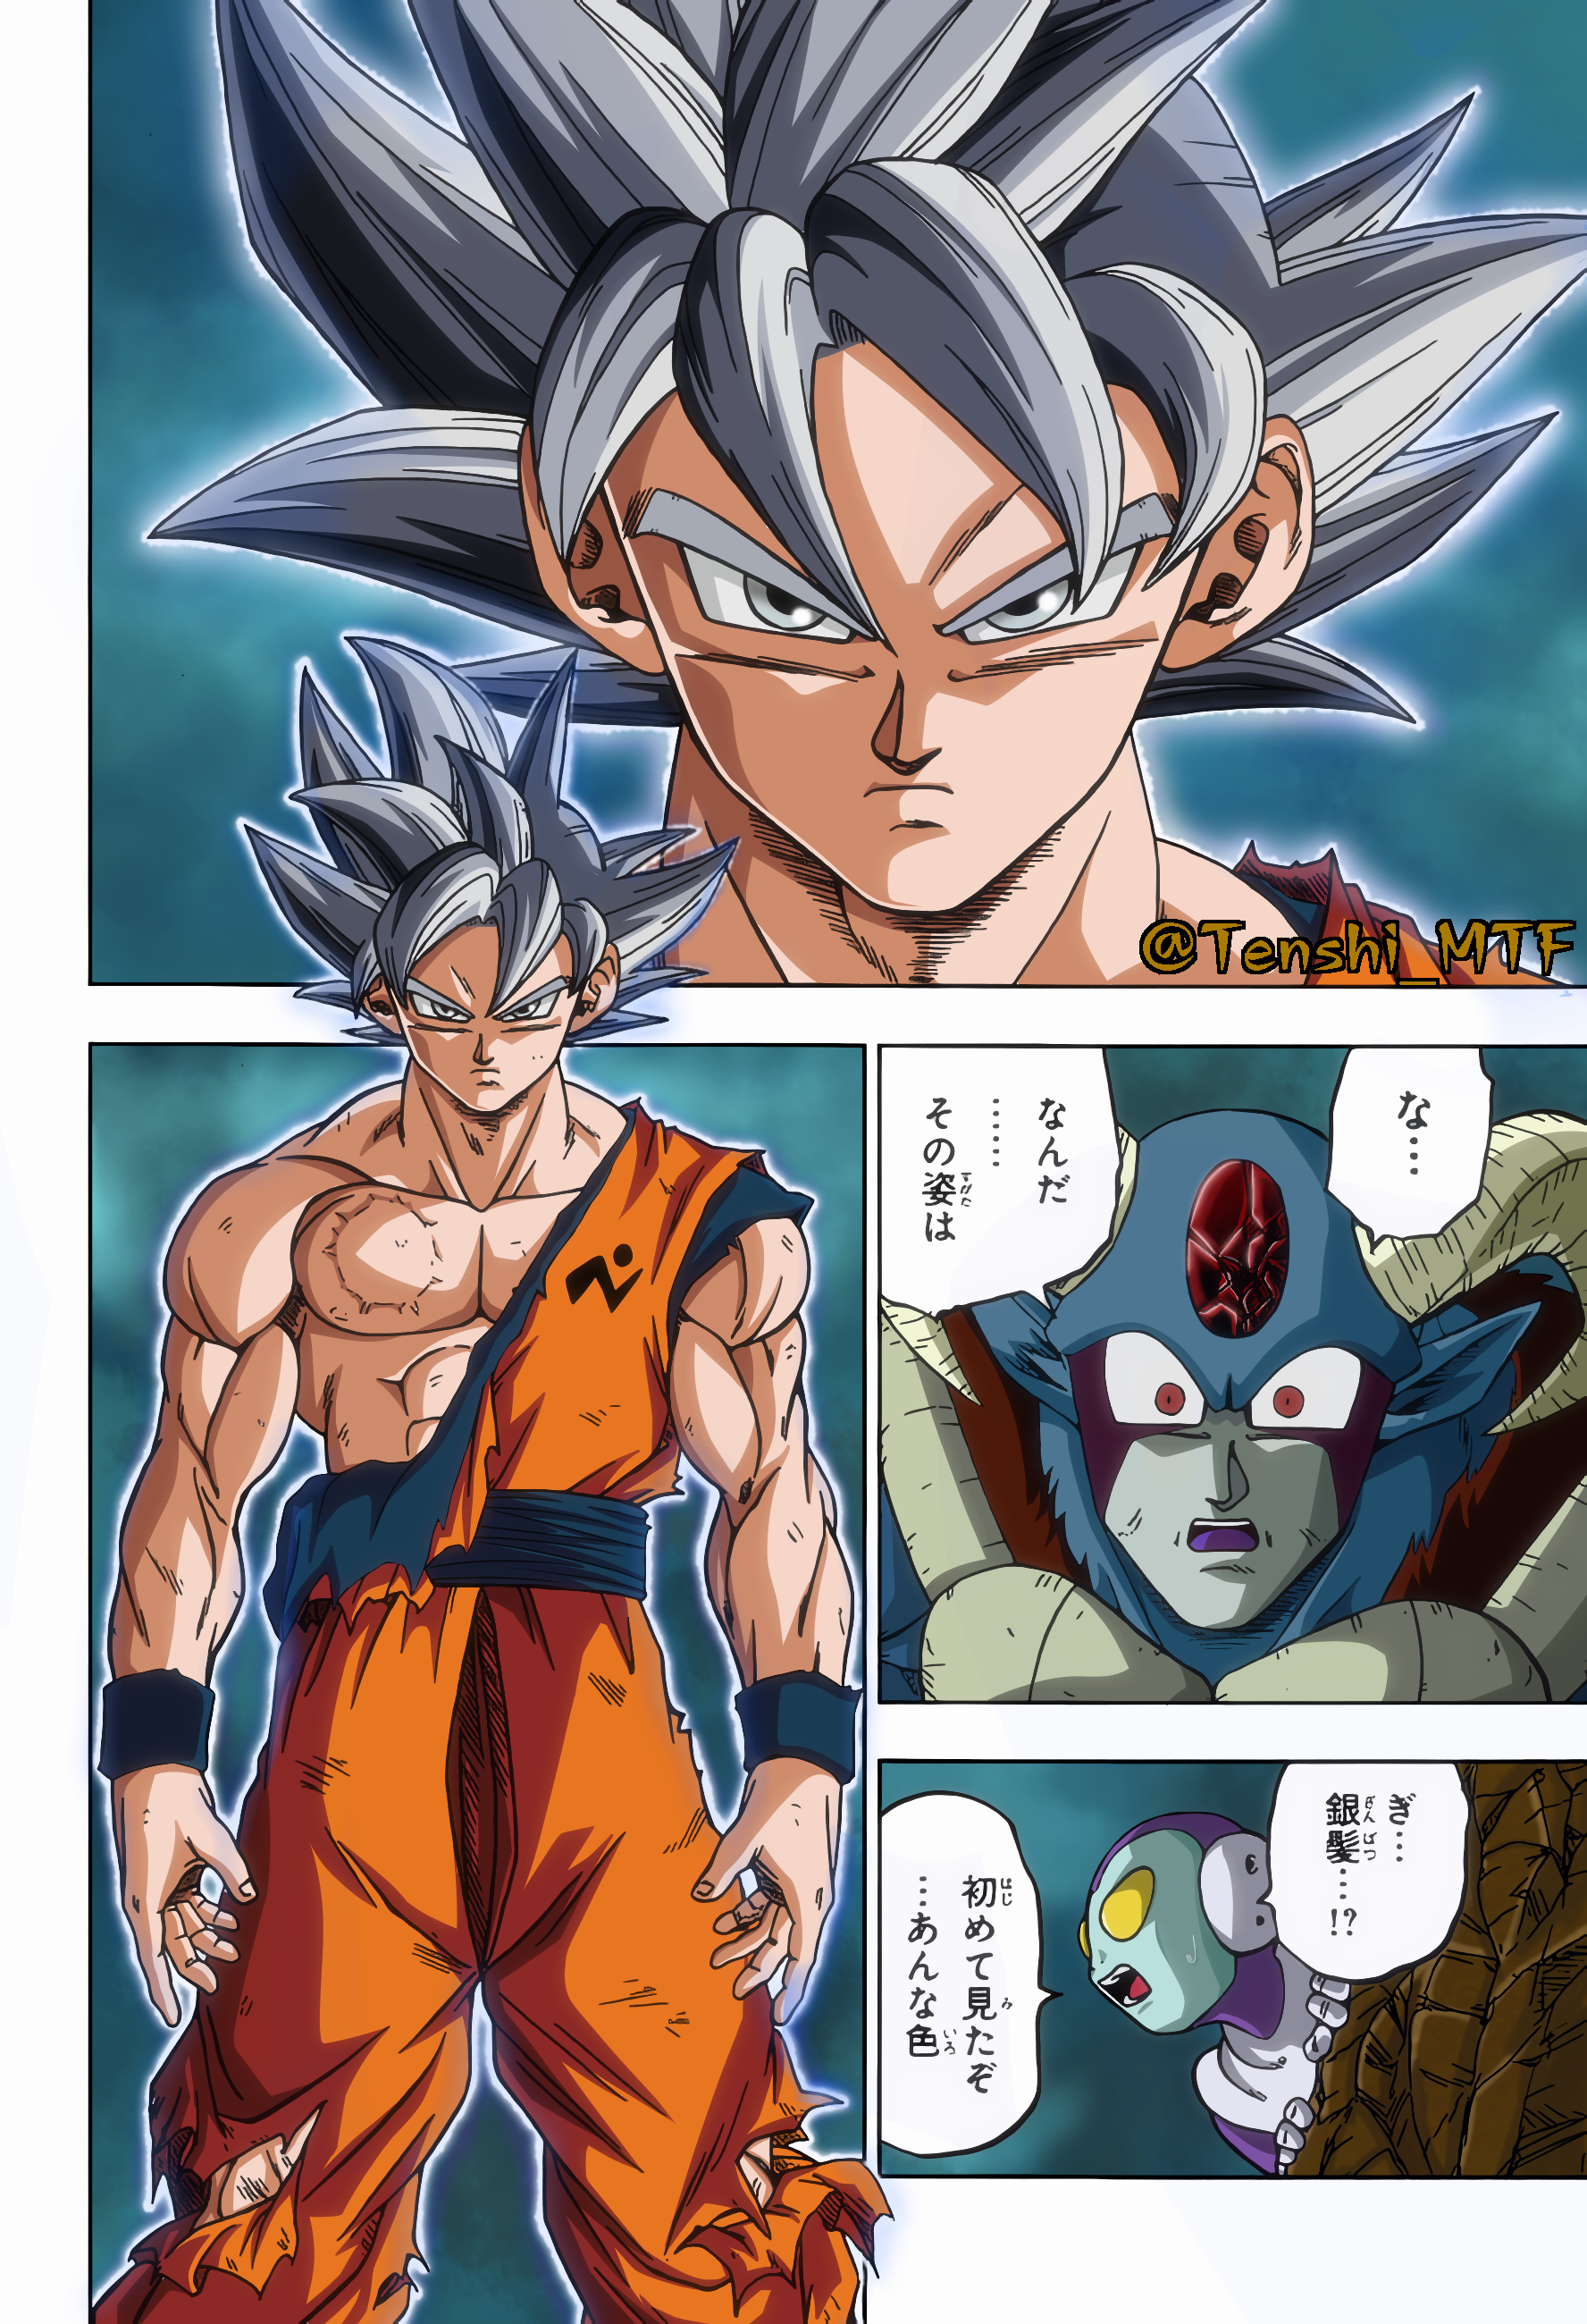 Goku Ssj Blue by AniArtes on DeviantArt  Dragon ball super goku, Anime  dragon ball goku, Dragon ball super manga